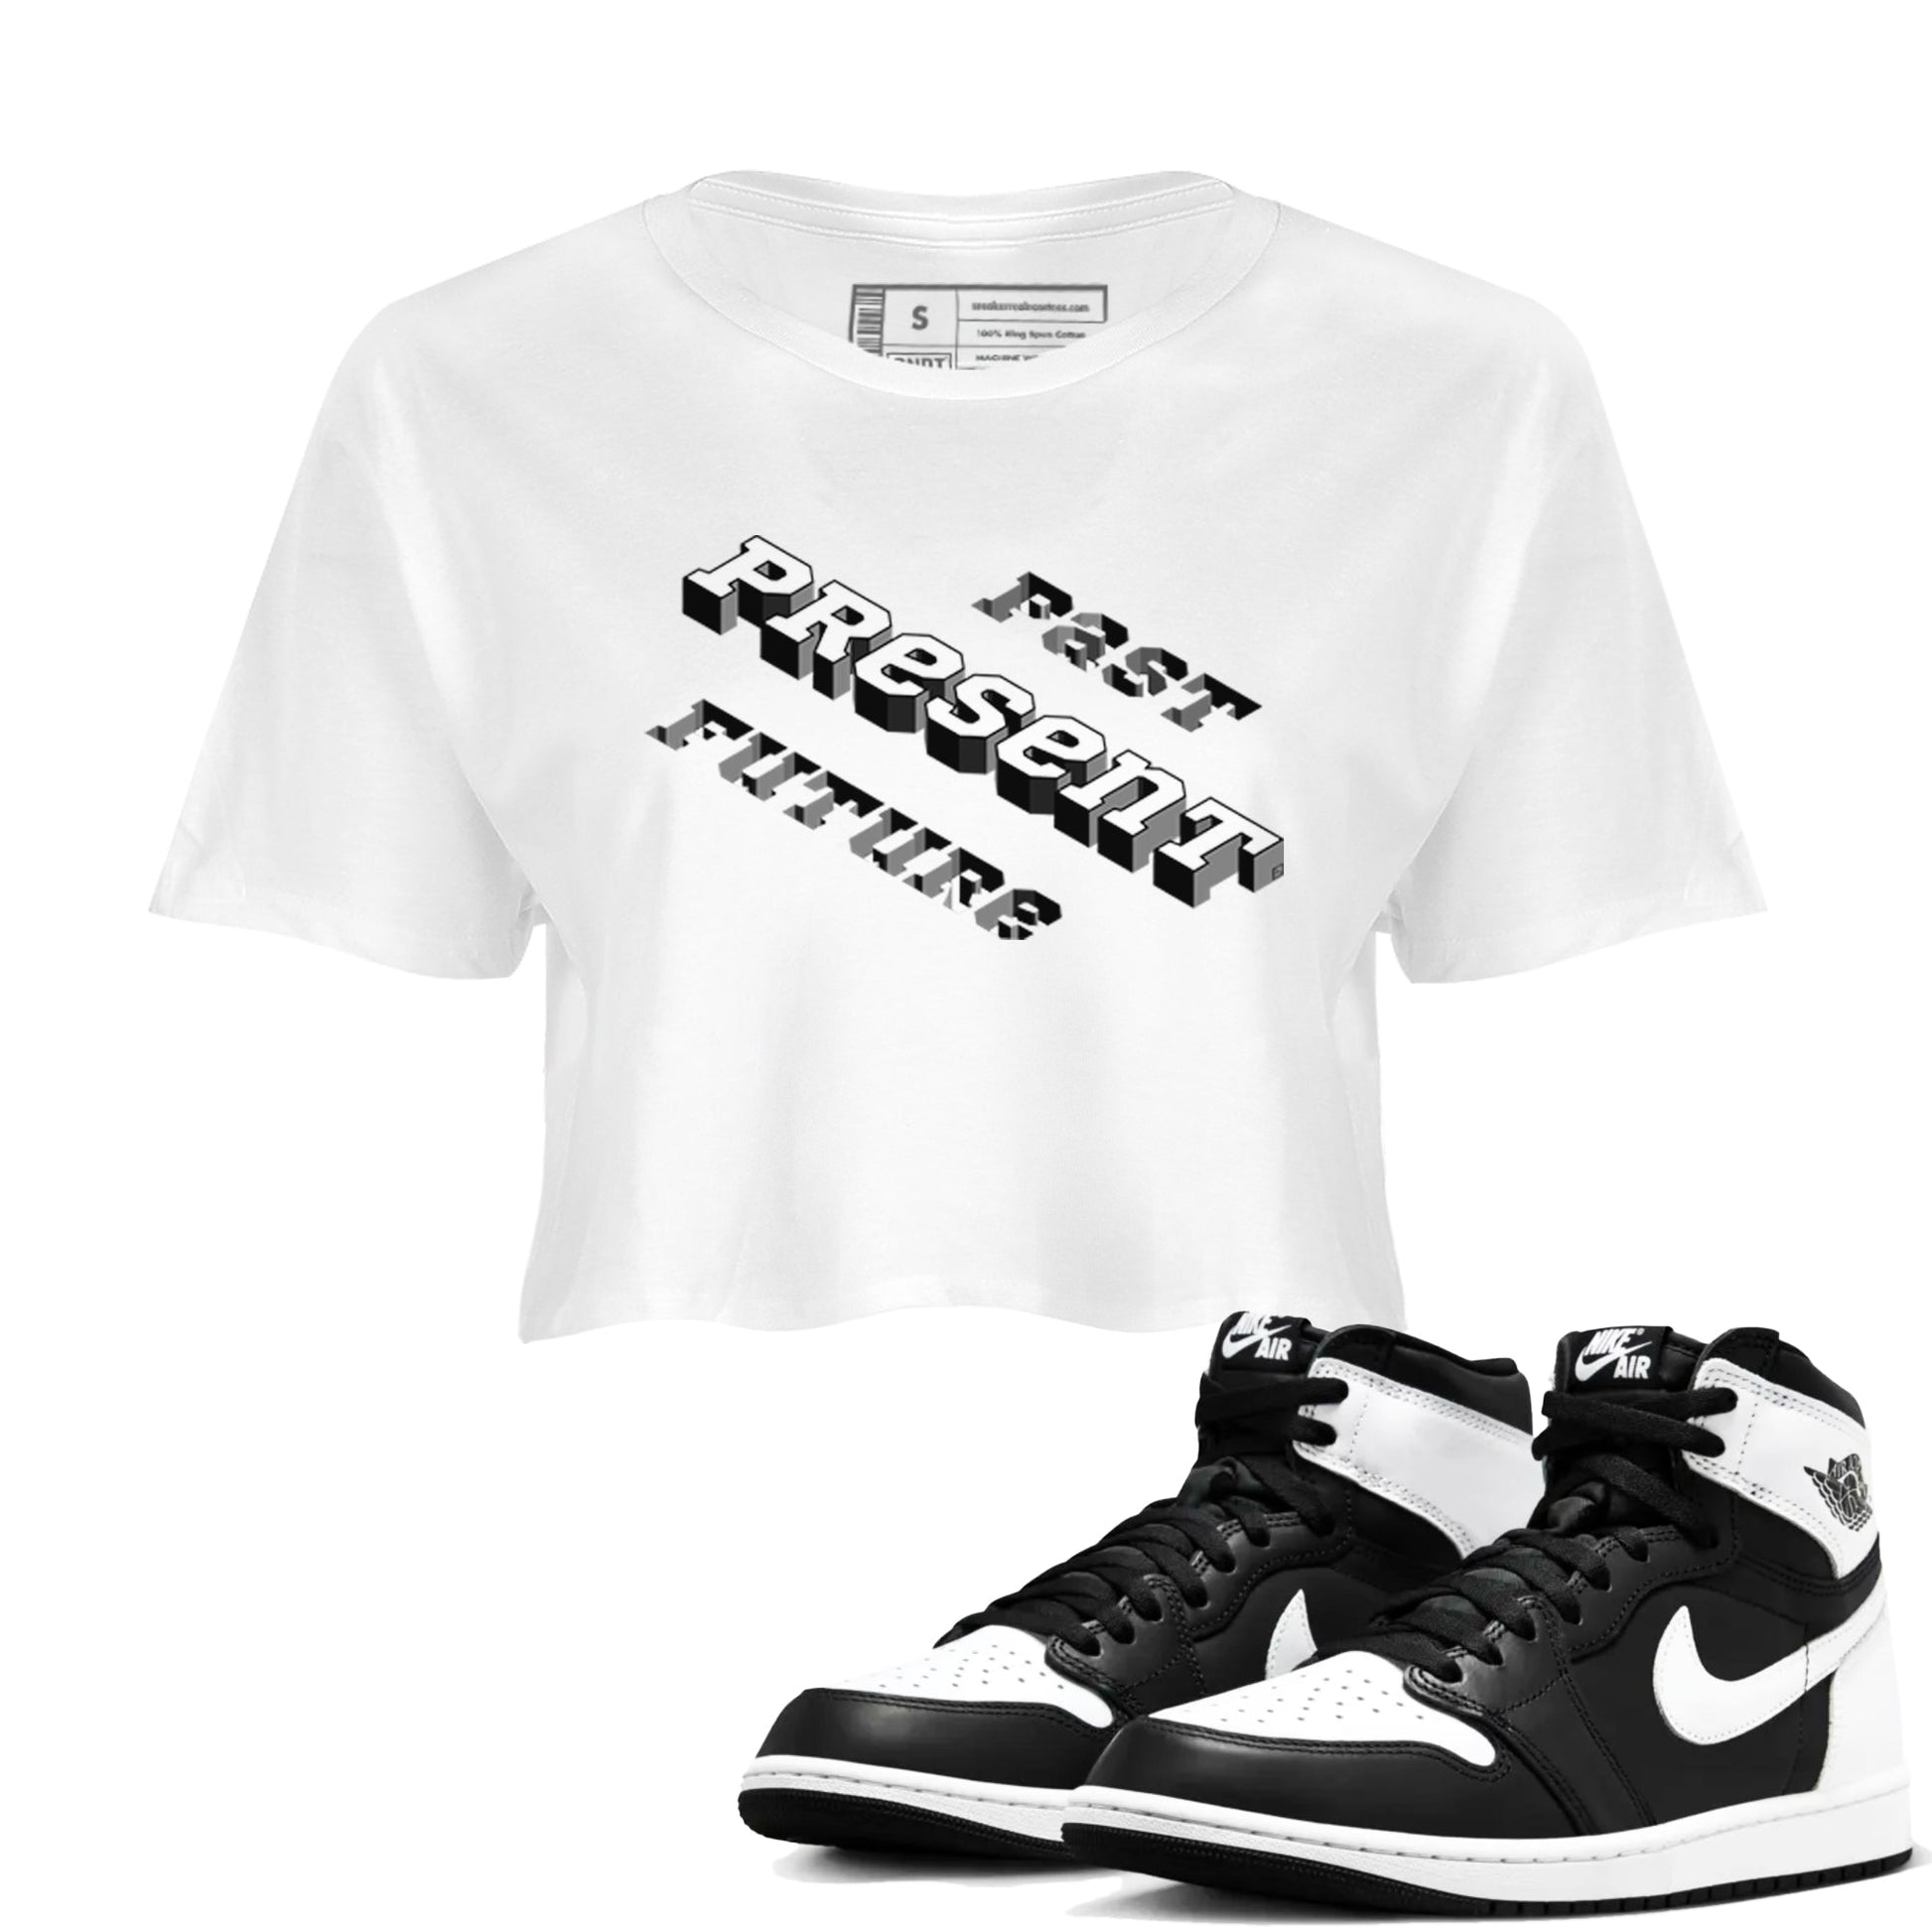 1s Black White shirt to match jordans Past Present Future sneaker tees Air Jordan 1 Black White SNRT Sneaker Release Tees White 1 crop length shirt